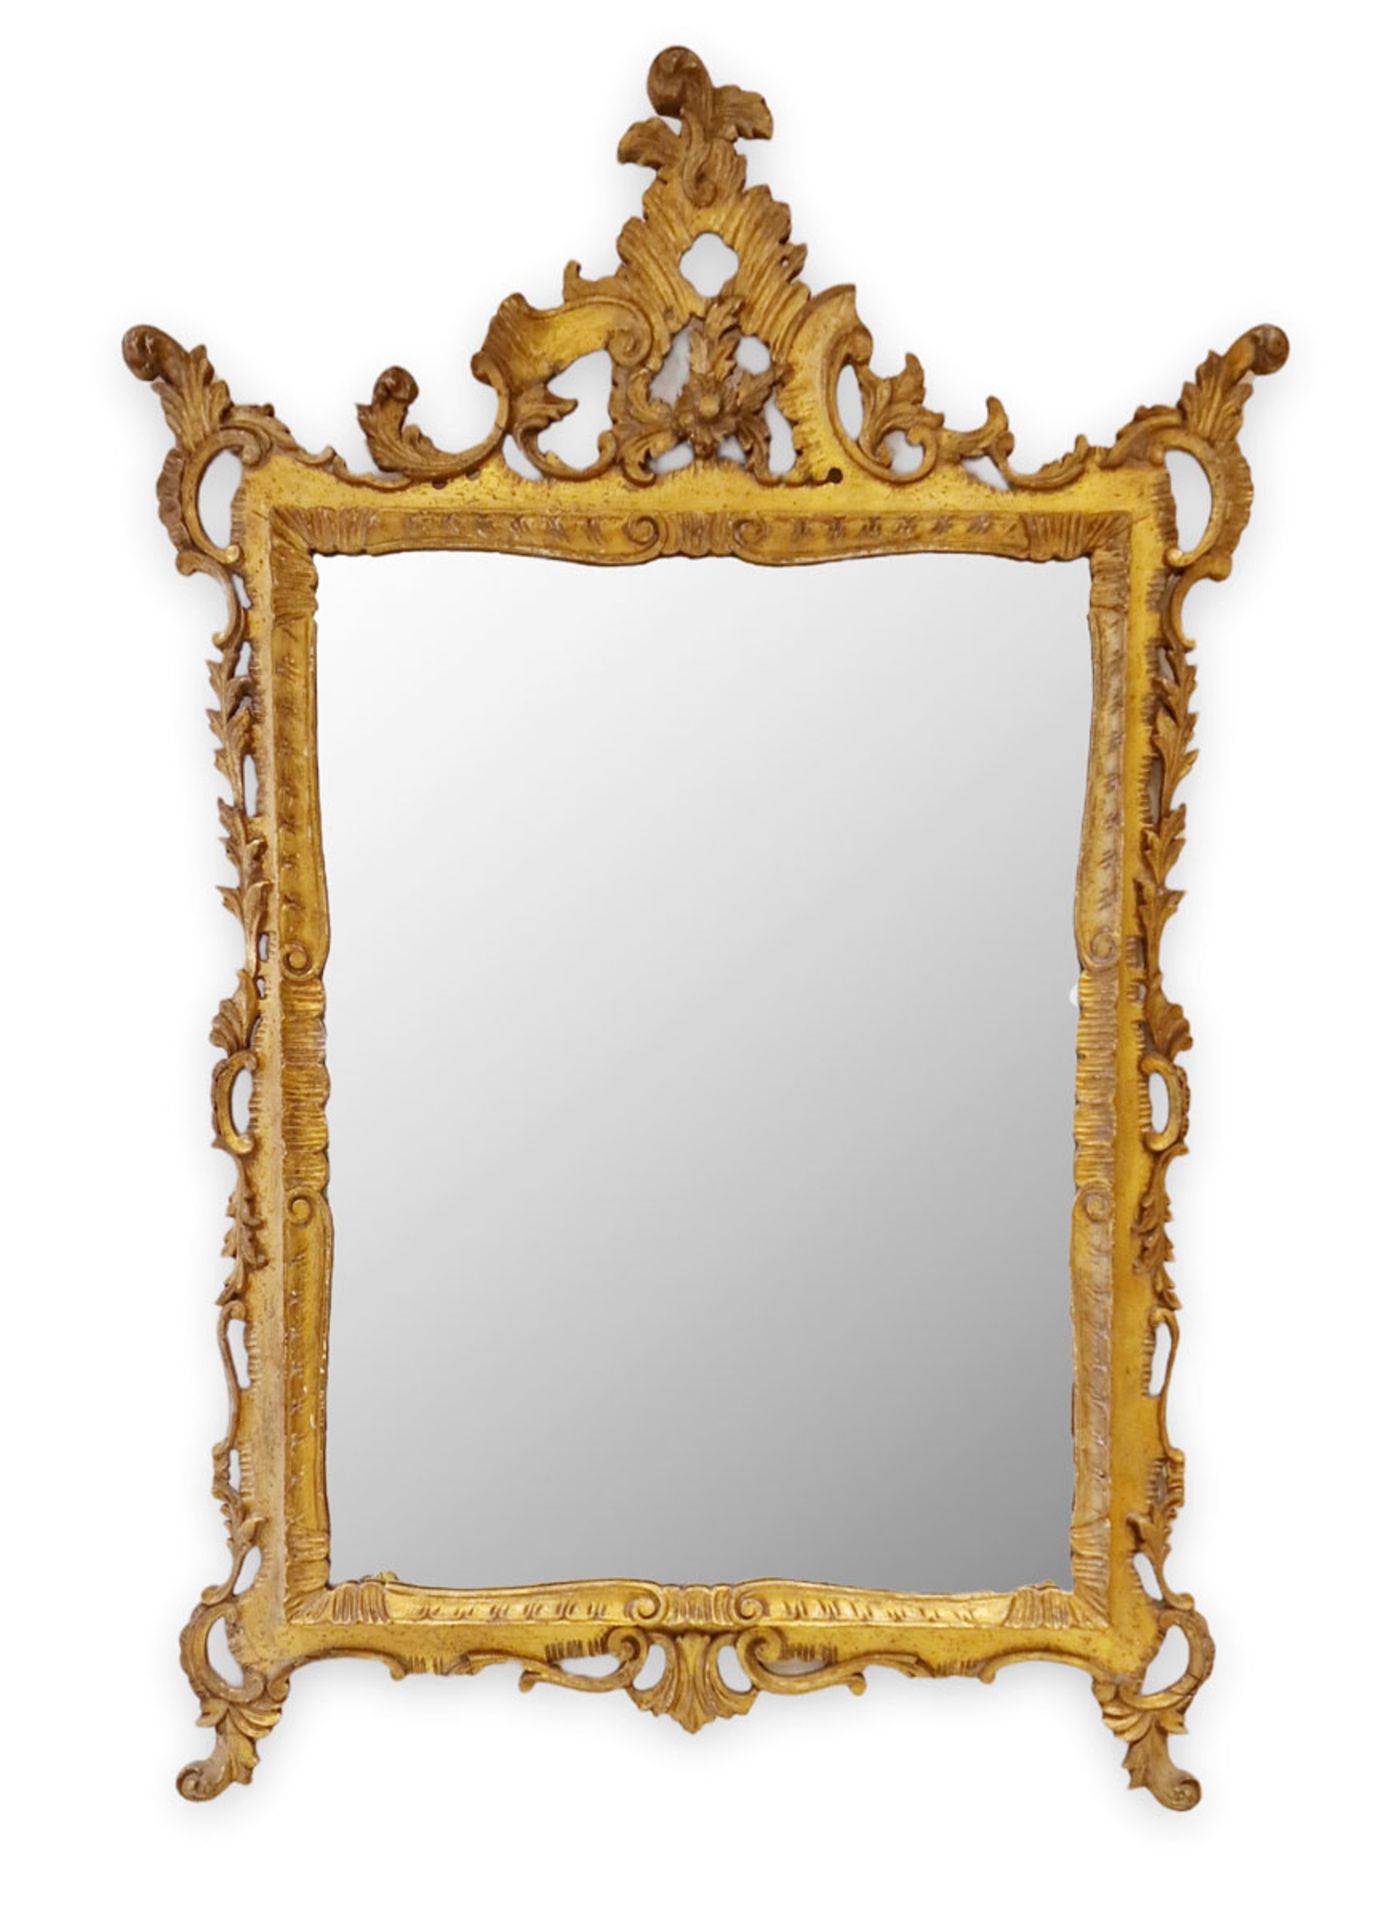 FRANCE, ca.1900 - Grand miroir à suspendre